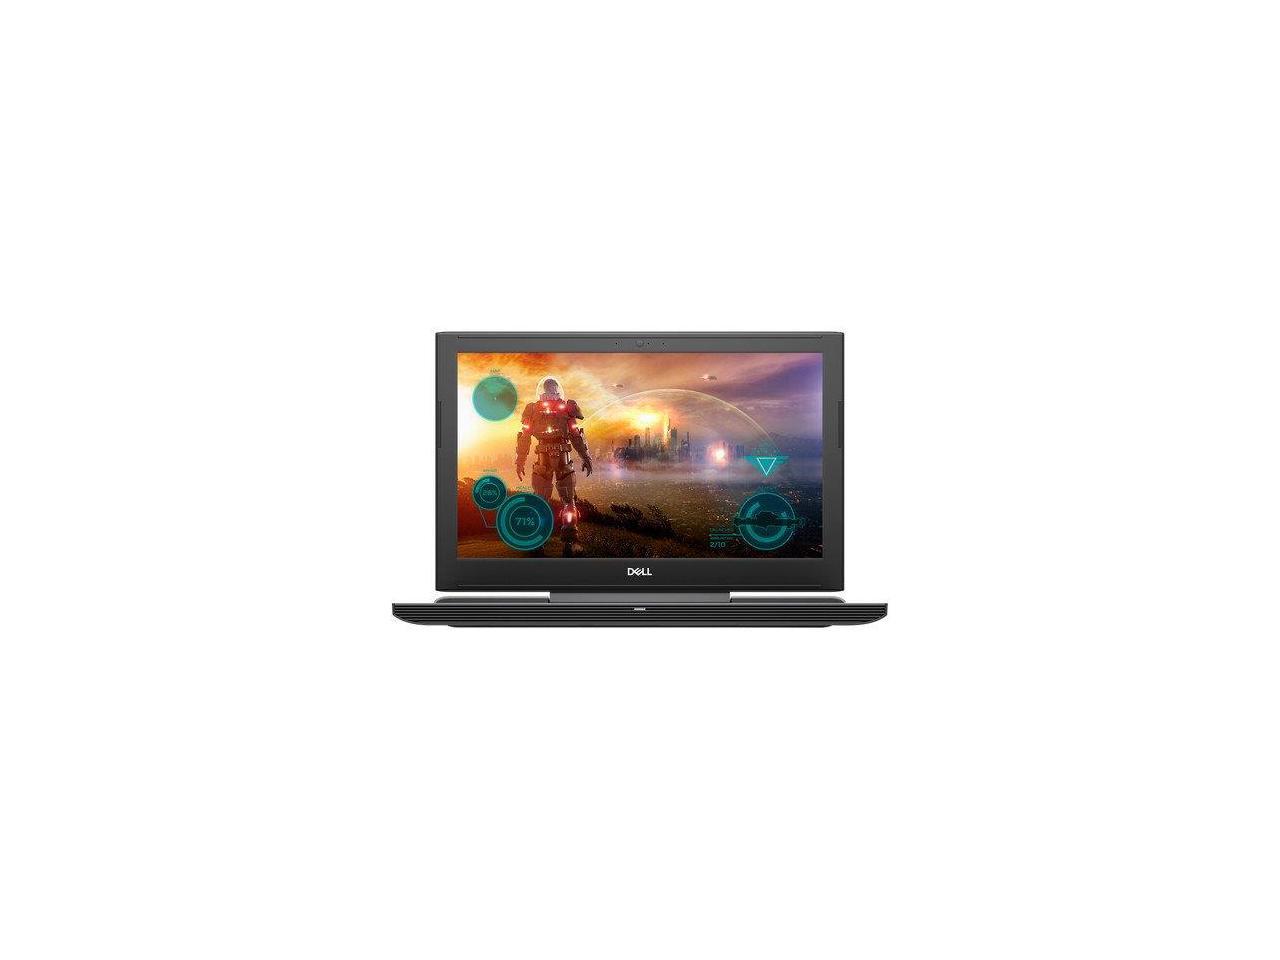 Dell Inspiron 7000 15.6" IPS FHD Gaming Laptop | VR Ready | Intel Quad Core i5-7300HQ | 16GB RAM 1024GB SSD 1TB HDD | NVIDIA GeForce GTX 1060 6GB GDDR5 | Windows 10 Black